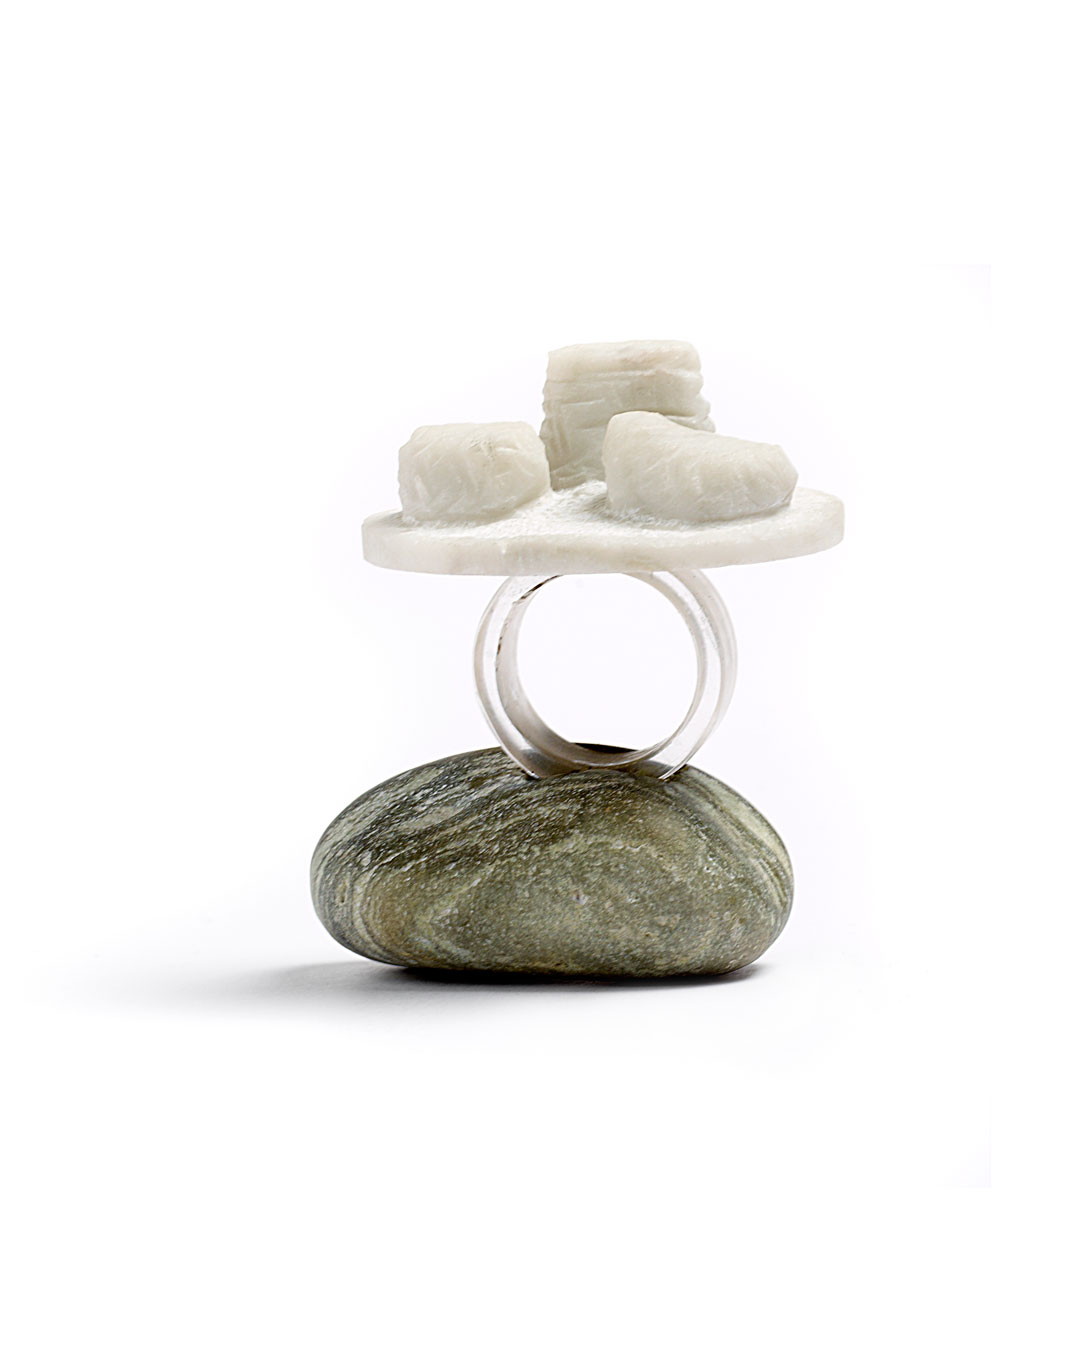 Ulrich Reithofer, Balance, 2012, ring; rock crystal, Carrara marble, Japanese serpentine, oyster shell, UV-hardening epoxy glue, 58 x 55 x 34 mm, €1350